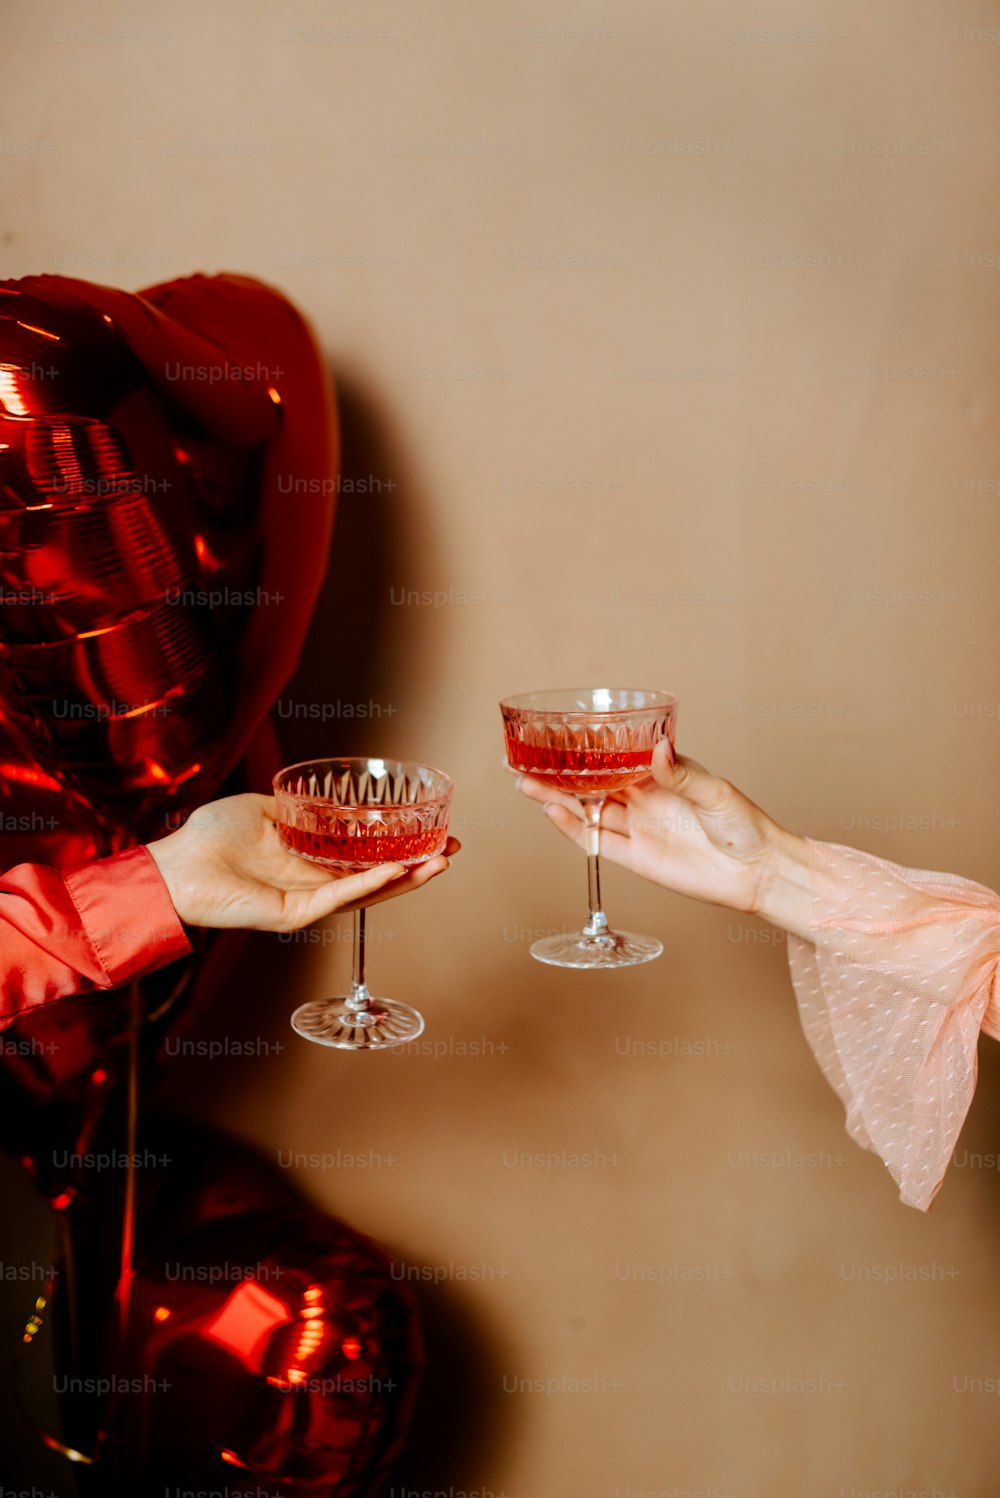 Una persona sosteniendo una copa de vino frente a un globo